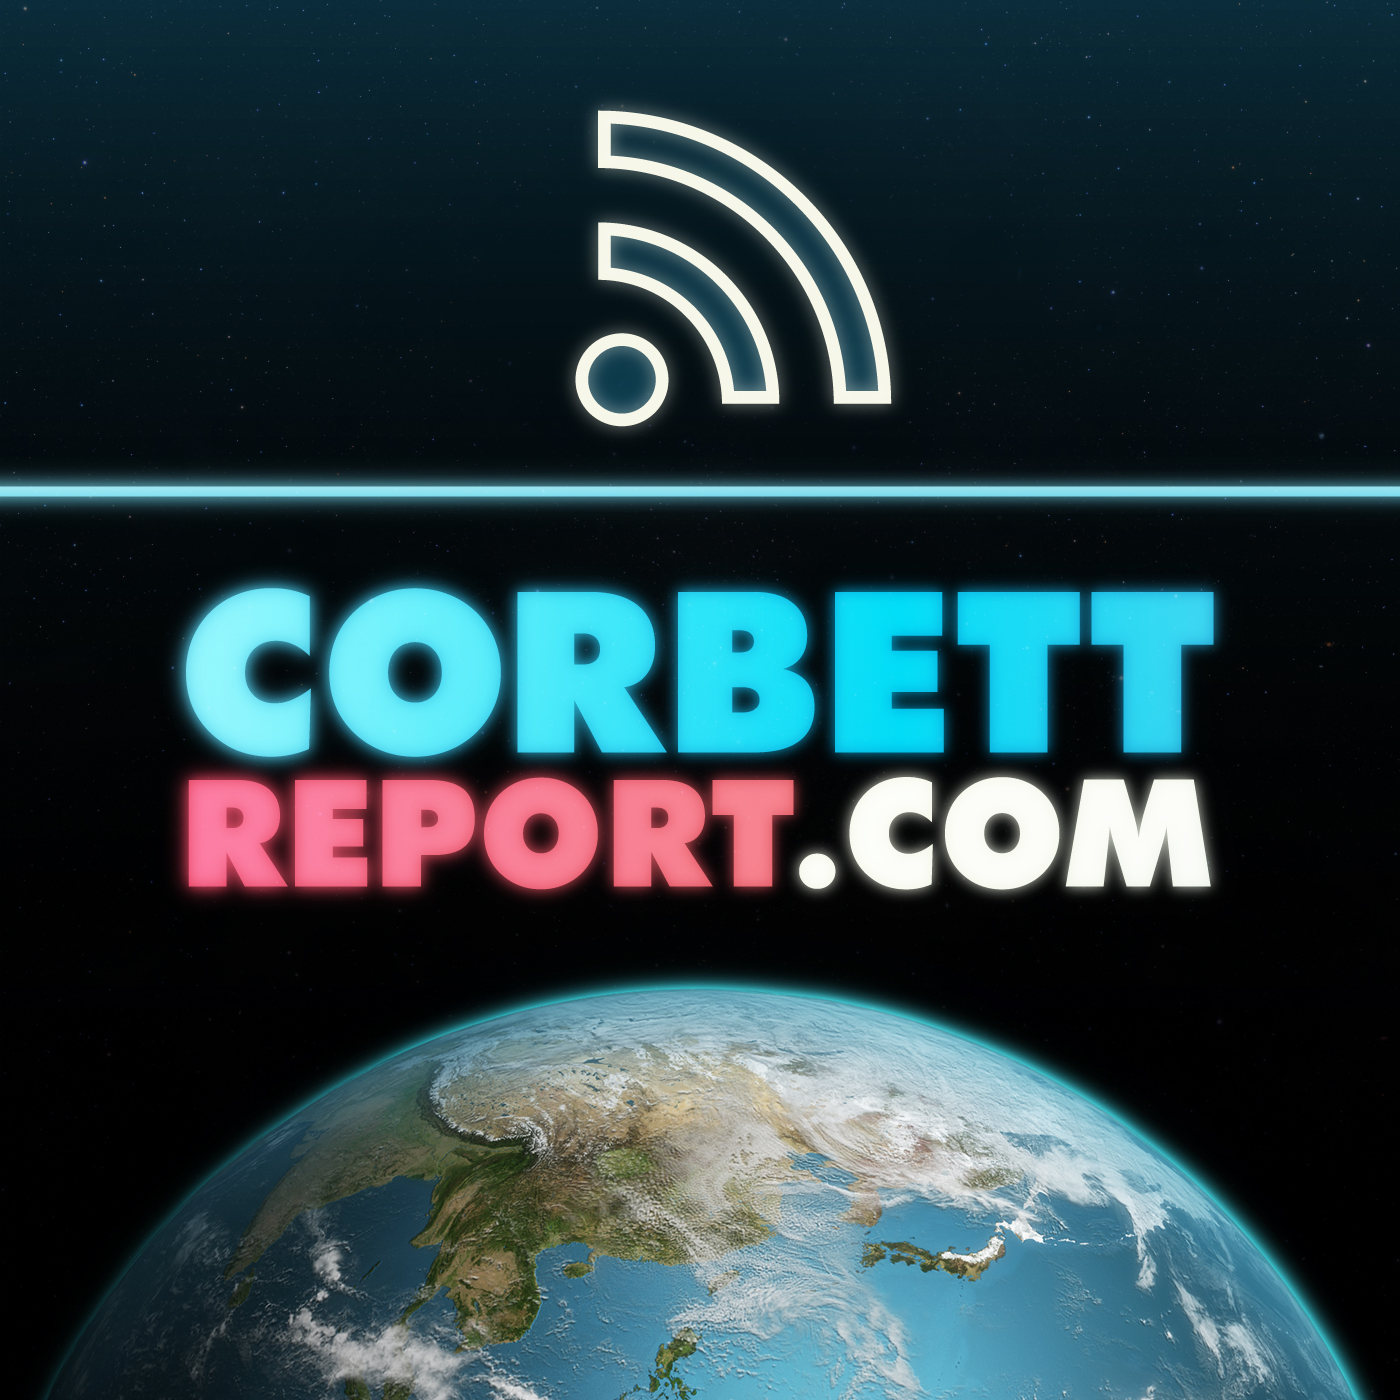 The Corbett Report Podcast artwork